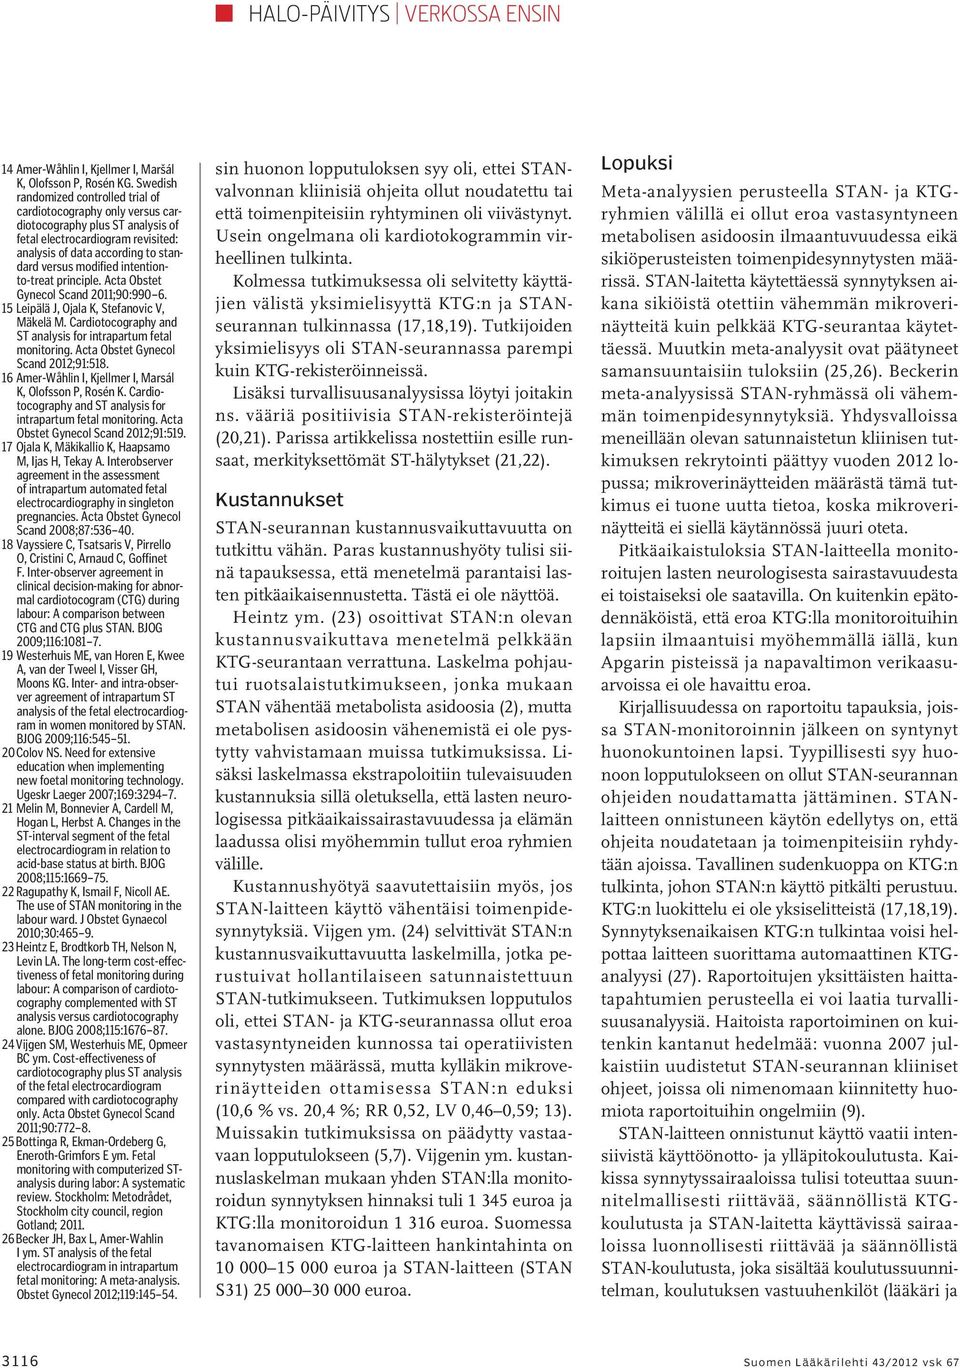 intentionto-treat principle. Acta Obstet Gynecol Scand 2011;90:990 6. 15 Leipälä J, Ojala K, Stefanovic V, Mäkelä M. Cardiotocography and ST analysis for intrapartum fetal monitoring.